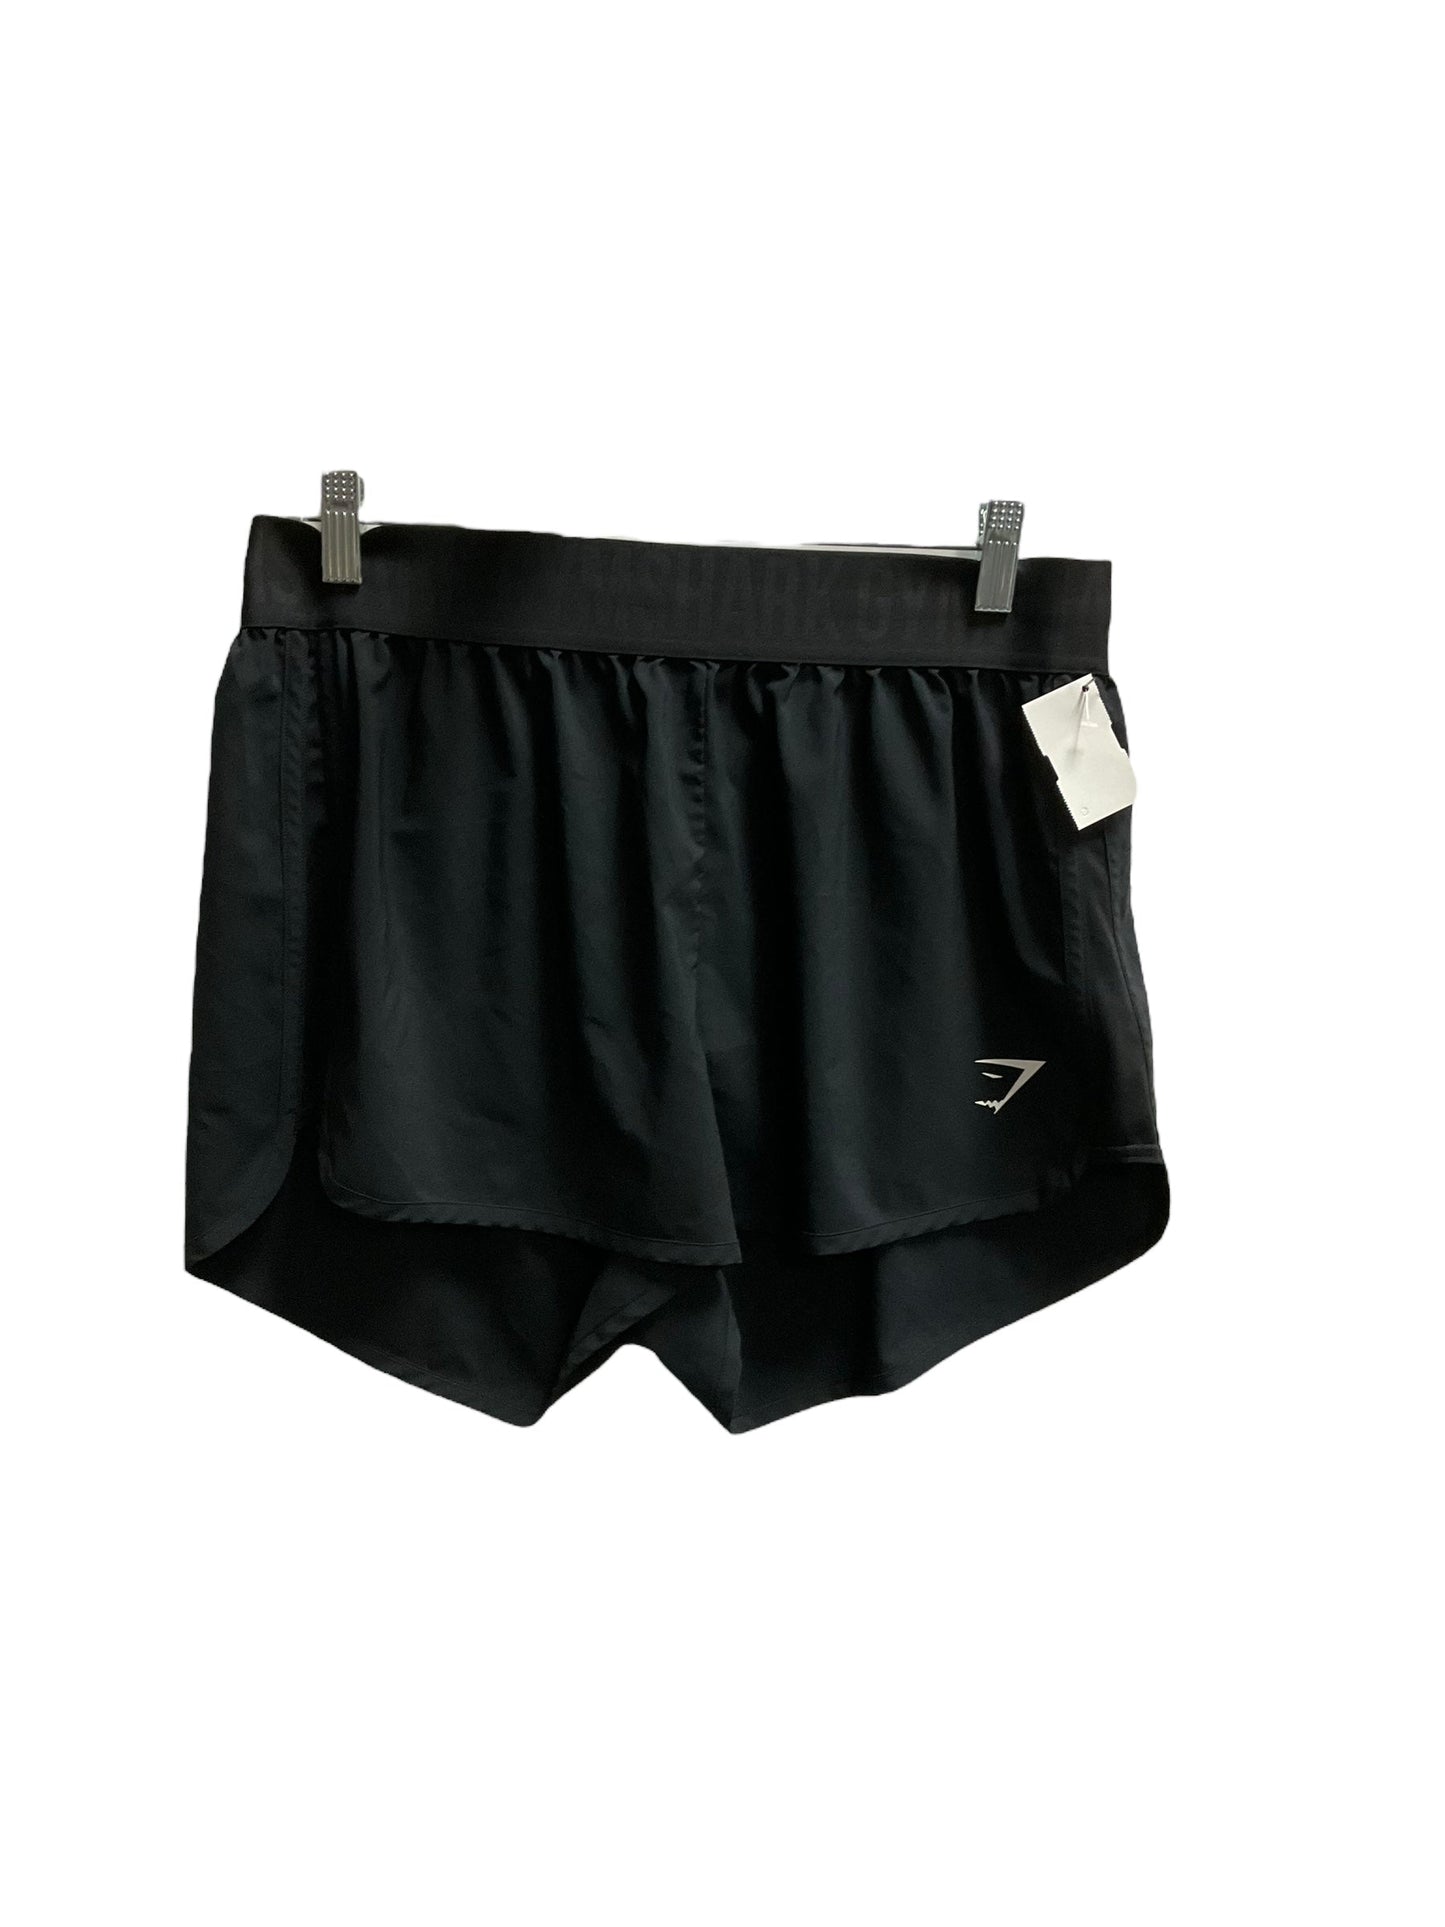 Black Athletic Shorts Gym Shark, Size L